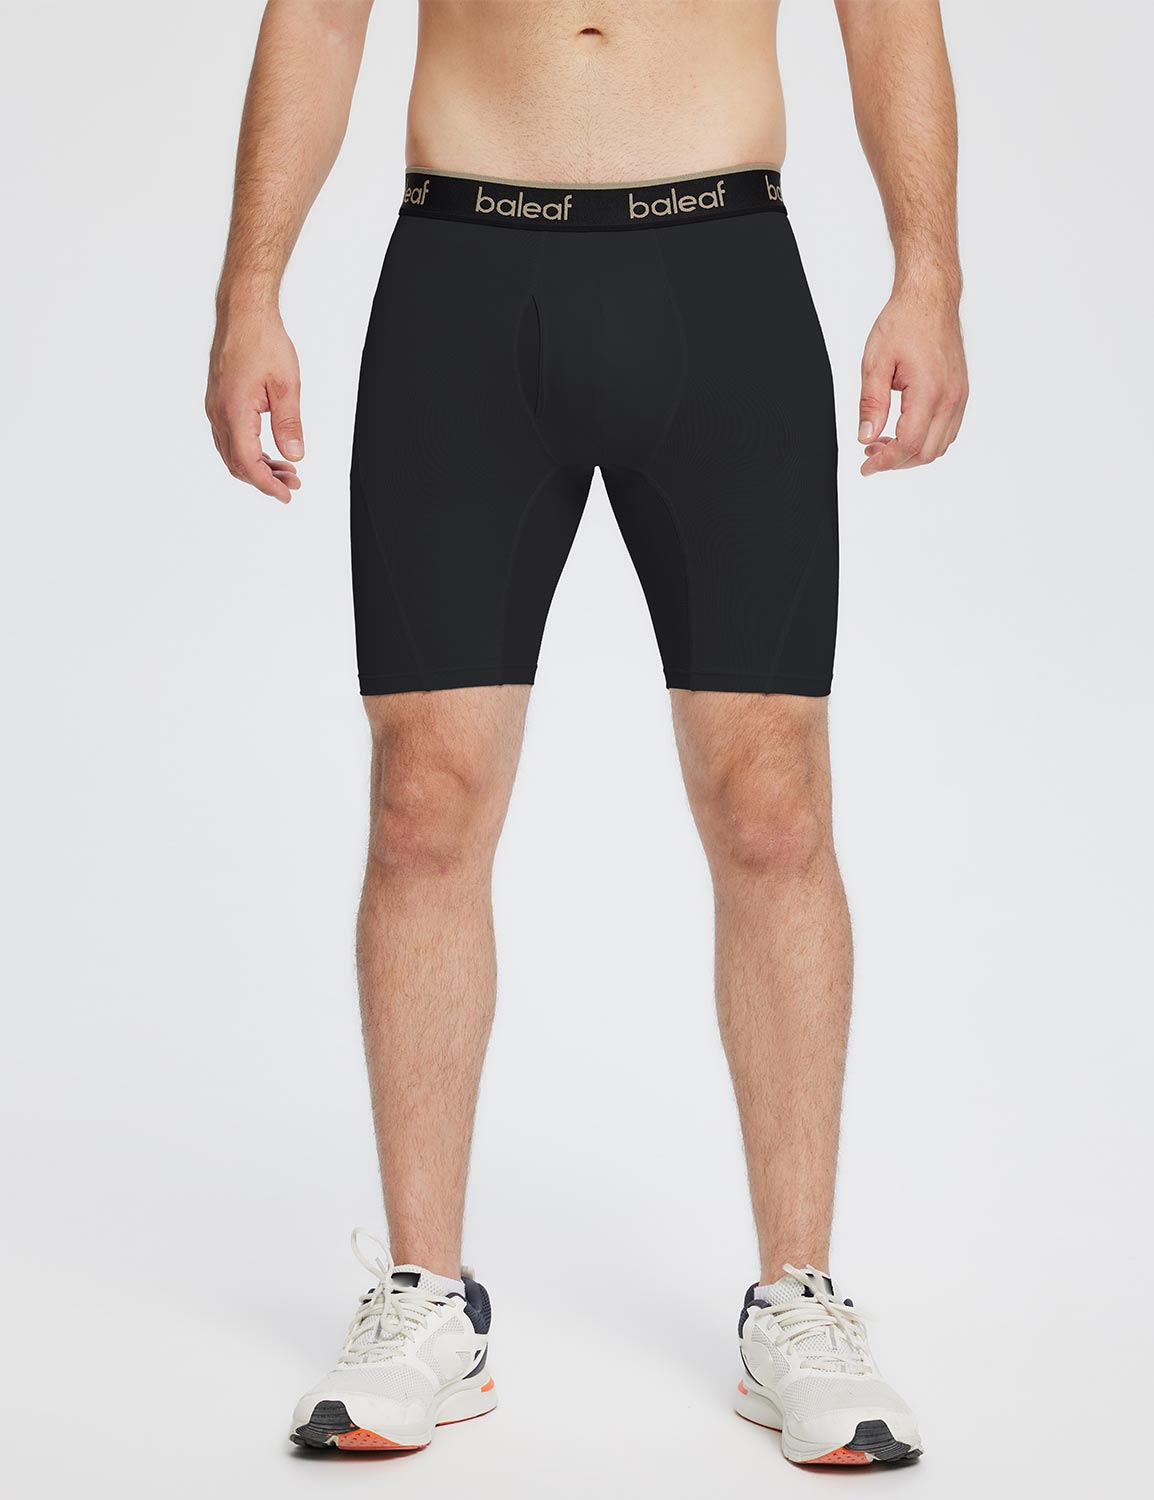 Baleaf Sports Polka Dots Black Casual Pants Size L (Petite) - 48% off